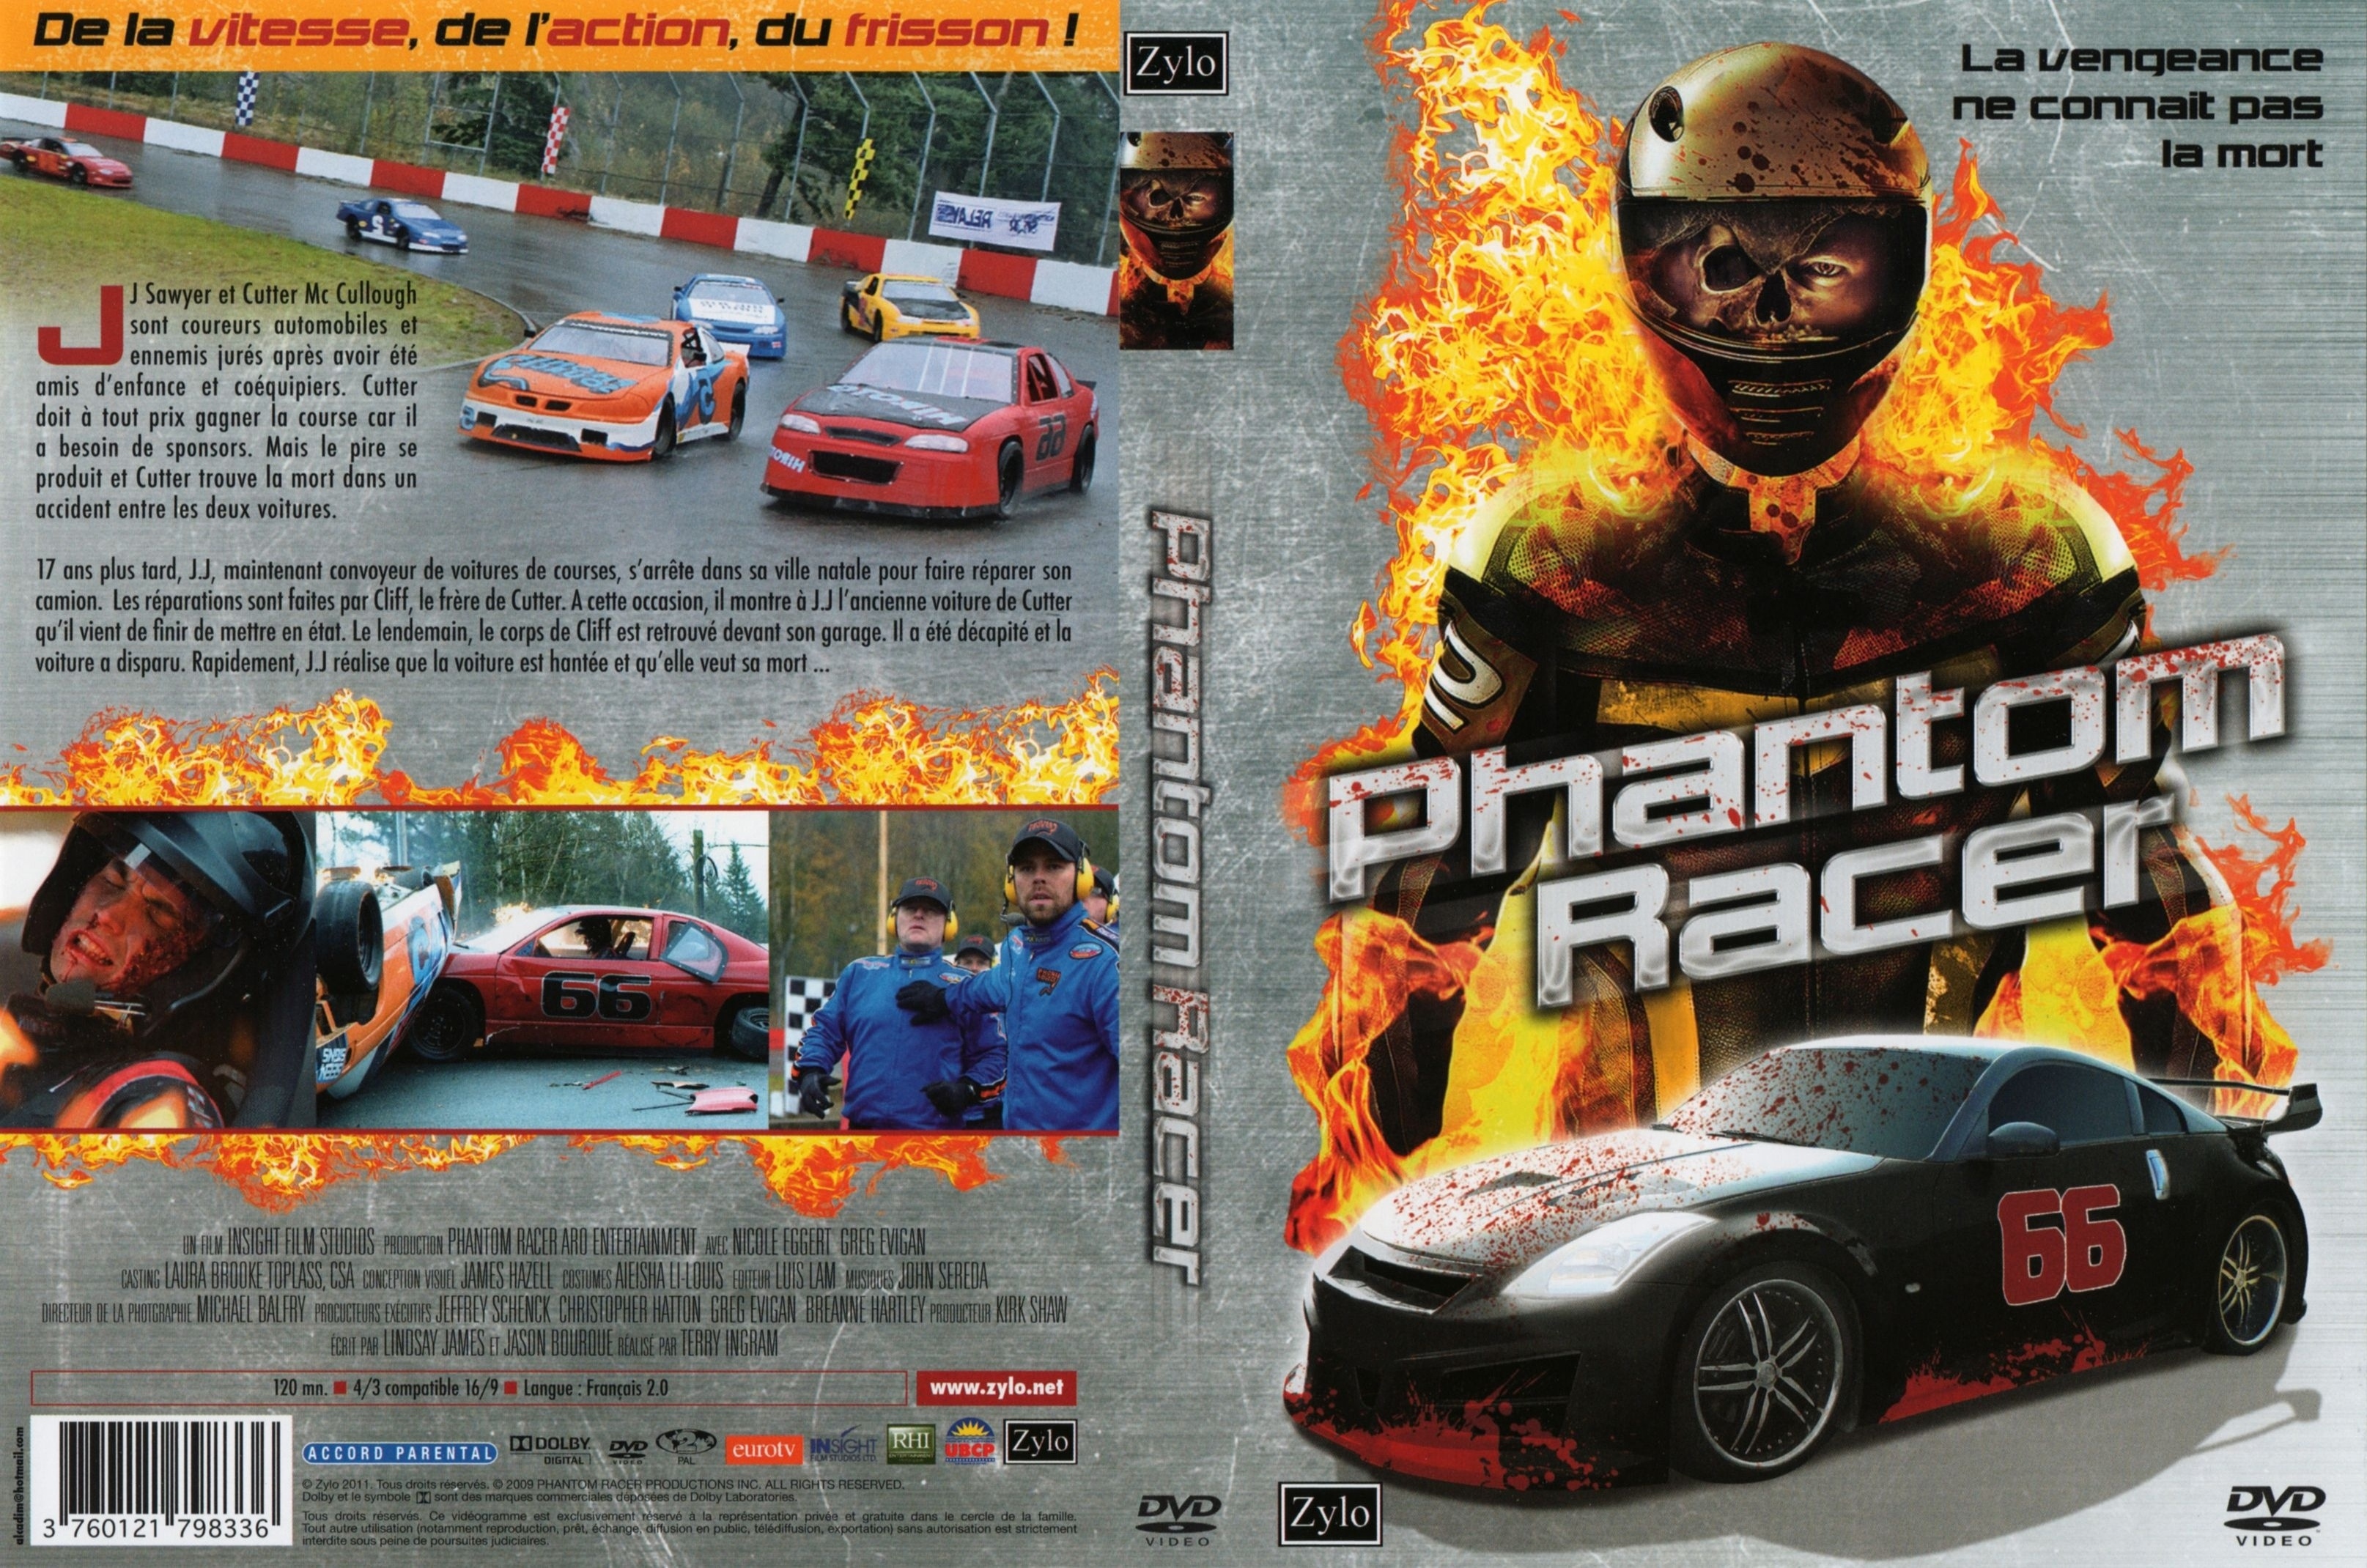 Jaquette DVD Phantom Racer